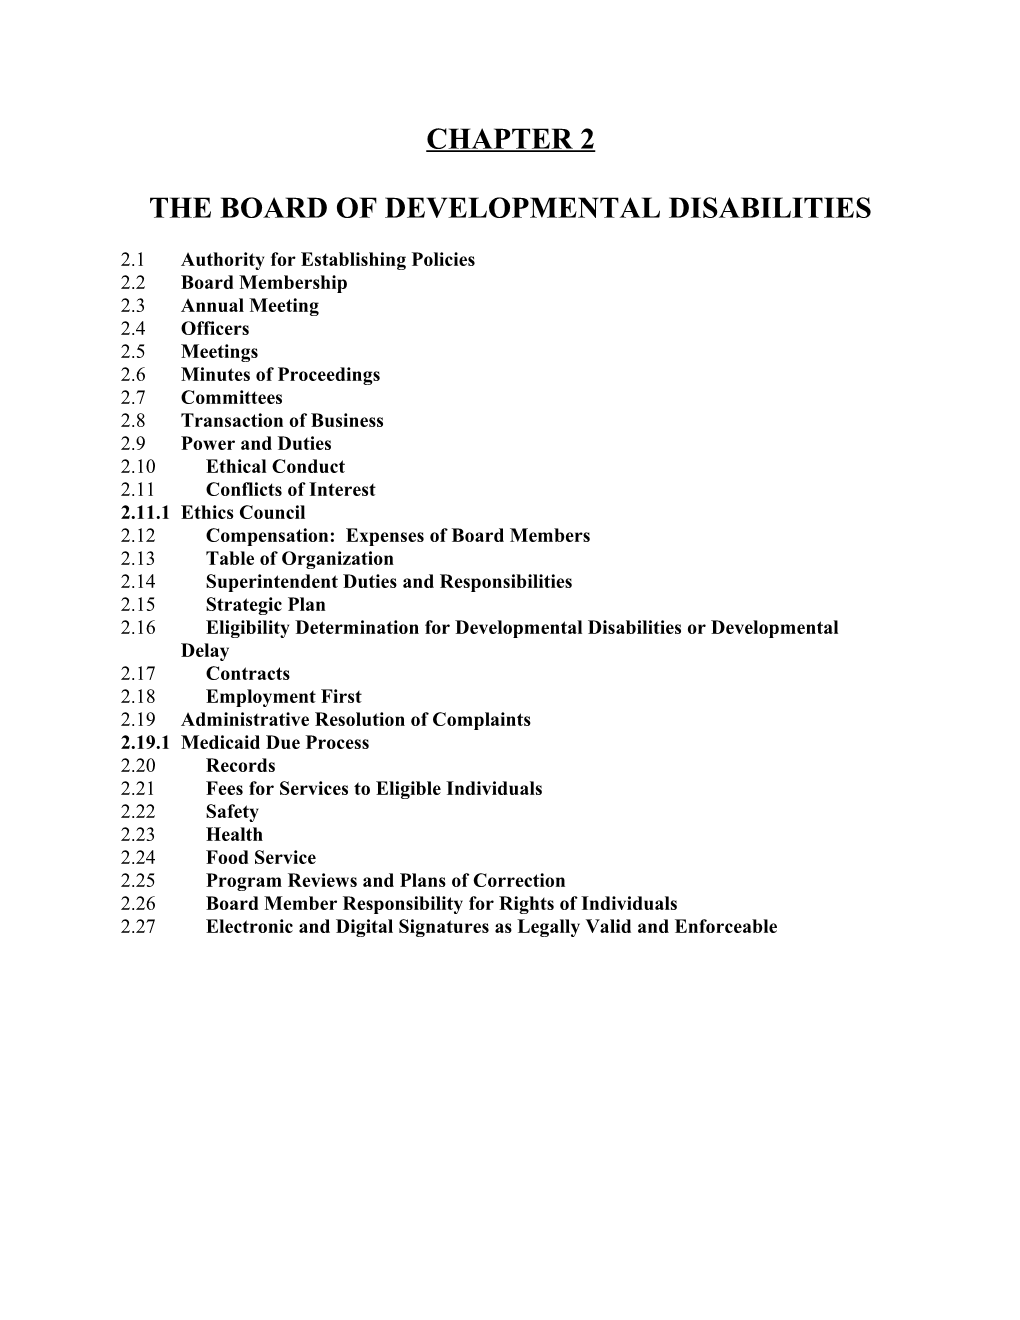 The Board of Developmental Disabilities